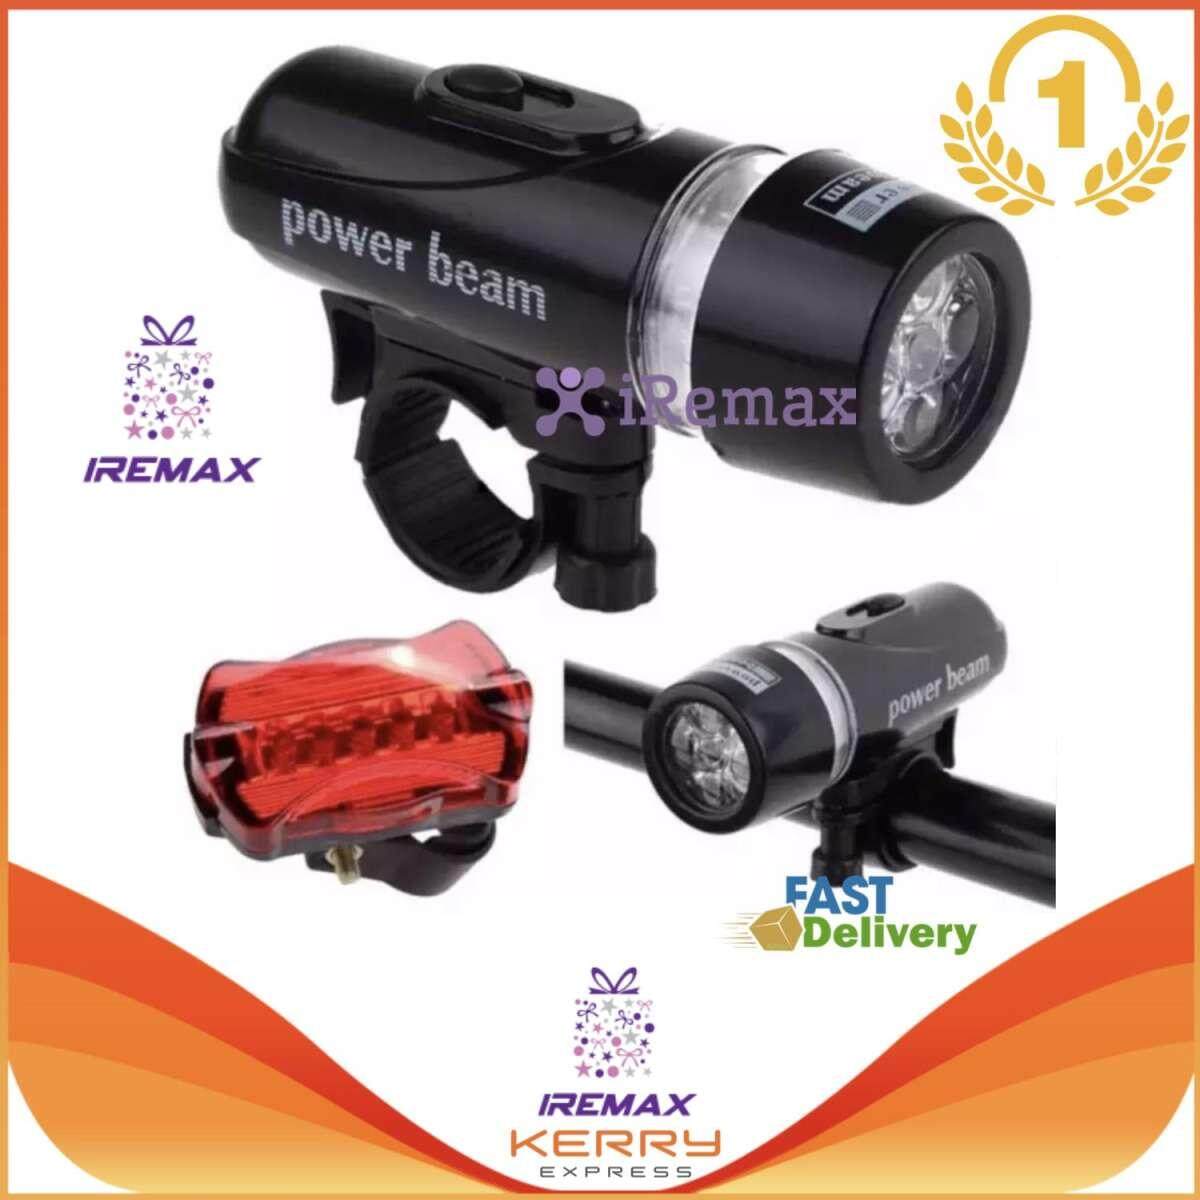 iRemax power beam ชุดไฟจักรยาน หน้า/หลัง พร้อมอุปกรณ์